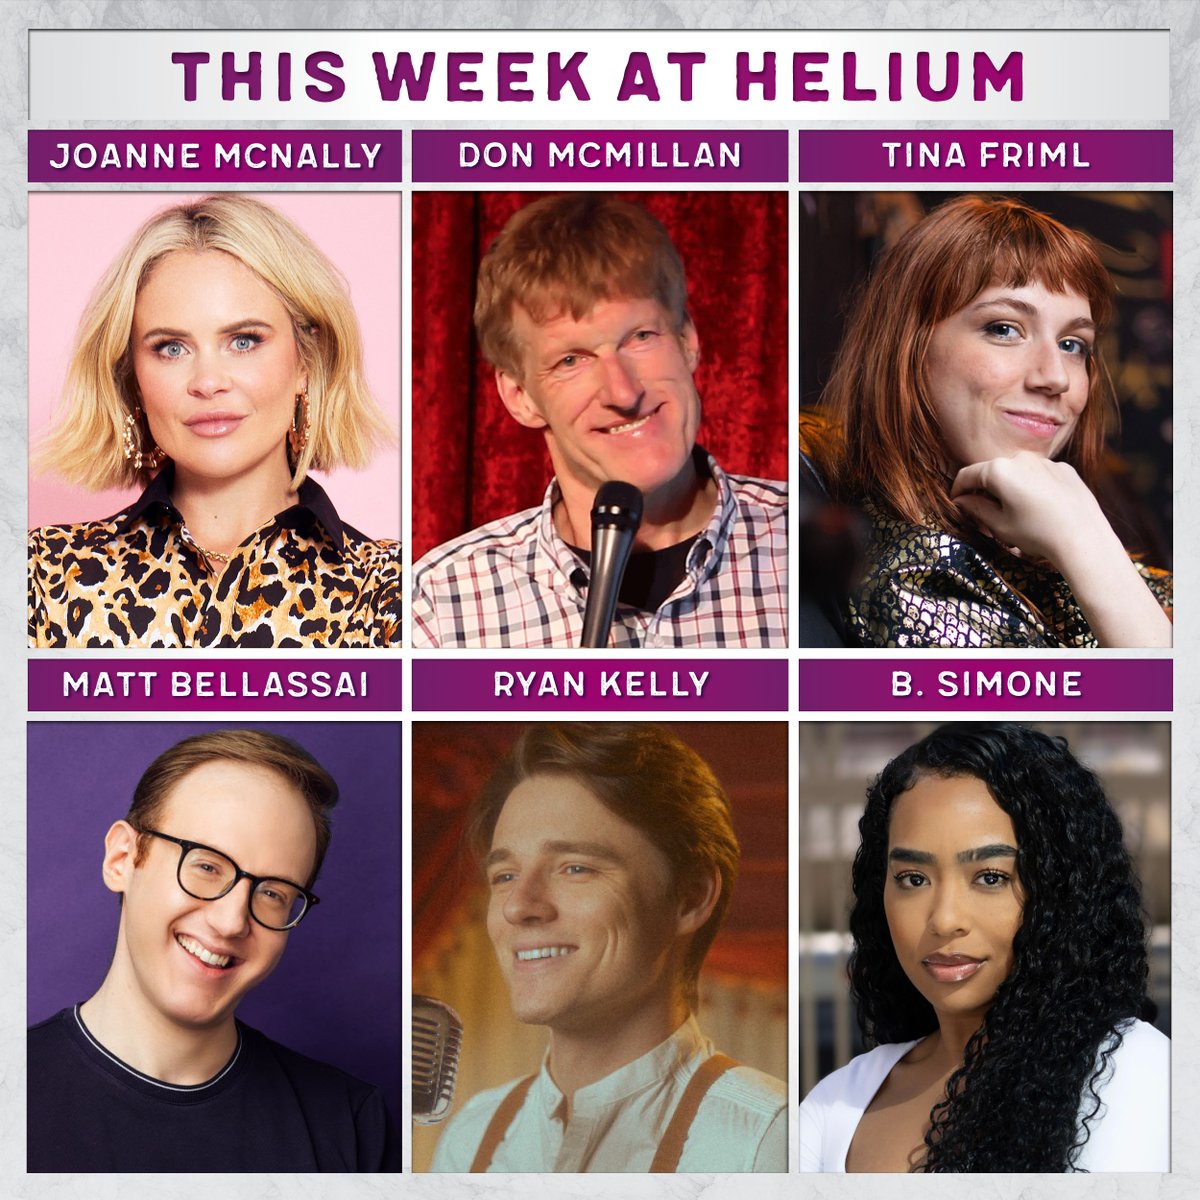 This Week at Helium | @jomcnally, @donmcmillan, Tina Friml, @MattBellassai, Ryan Kelly, + @TheBSimone headlines the weekend! Get tickets now: bit.ly/3ZQ5OiE